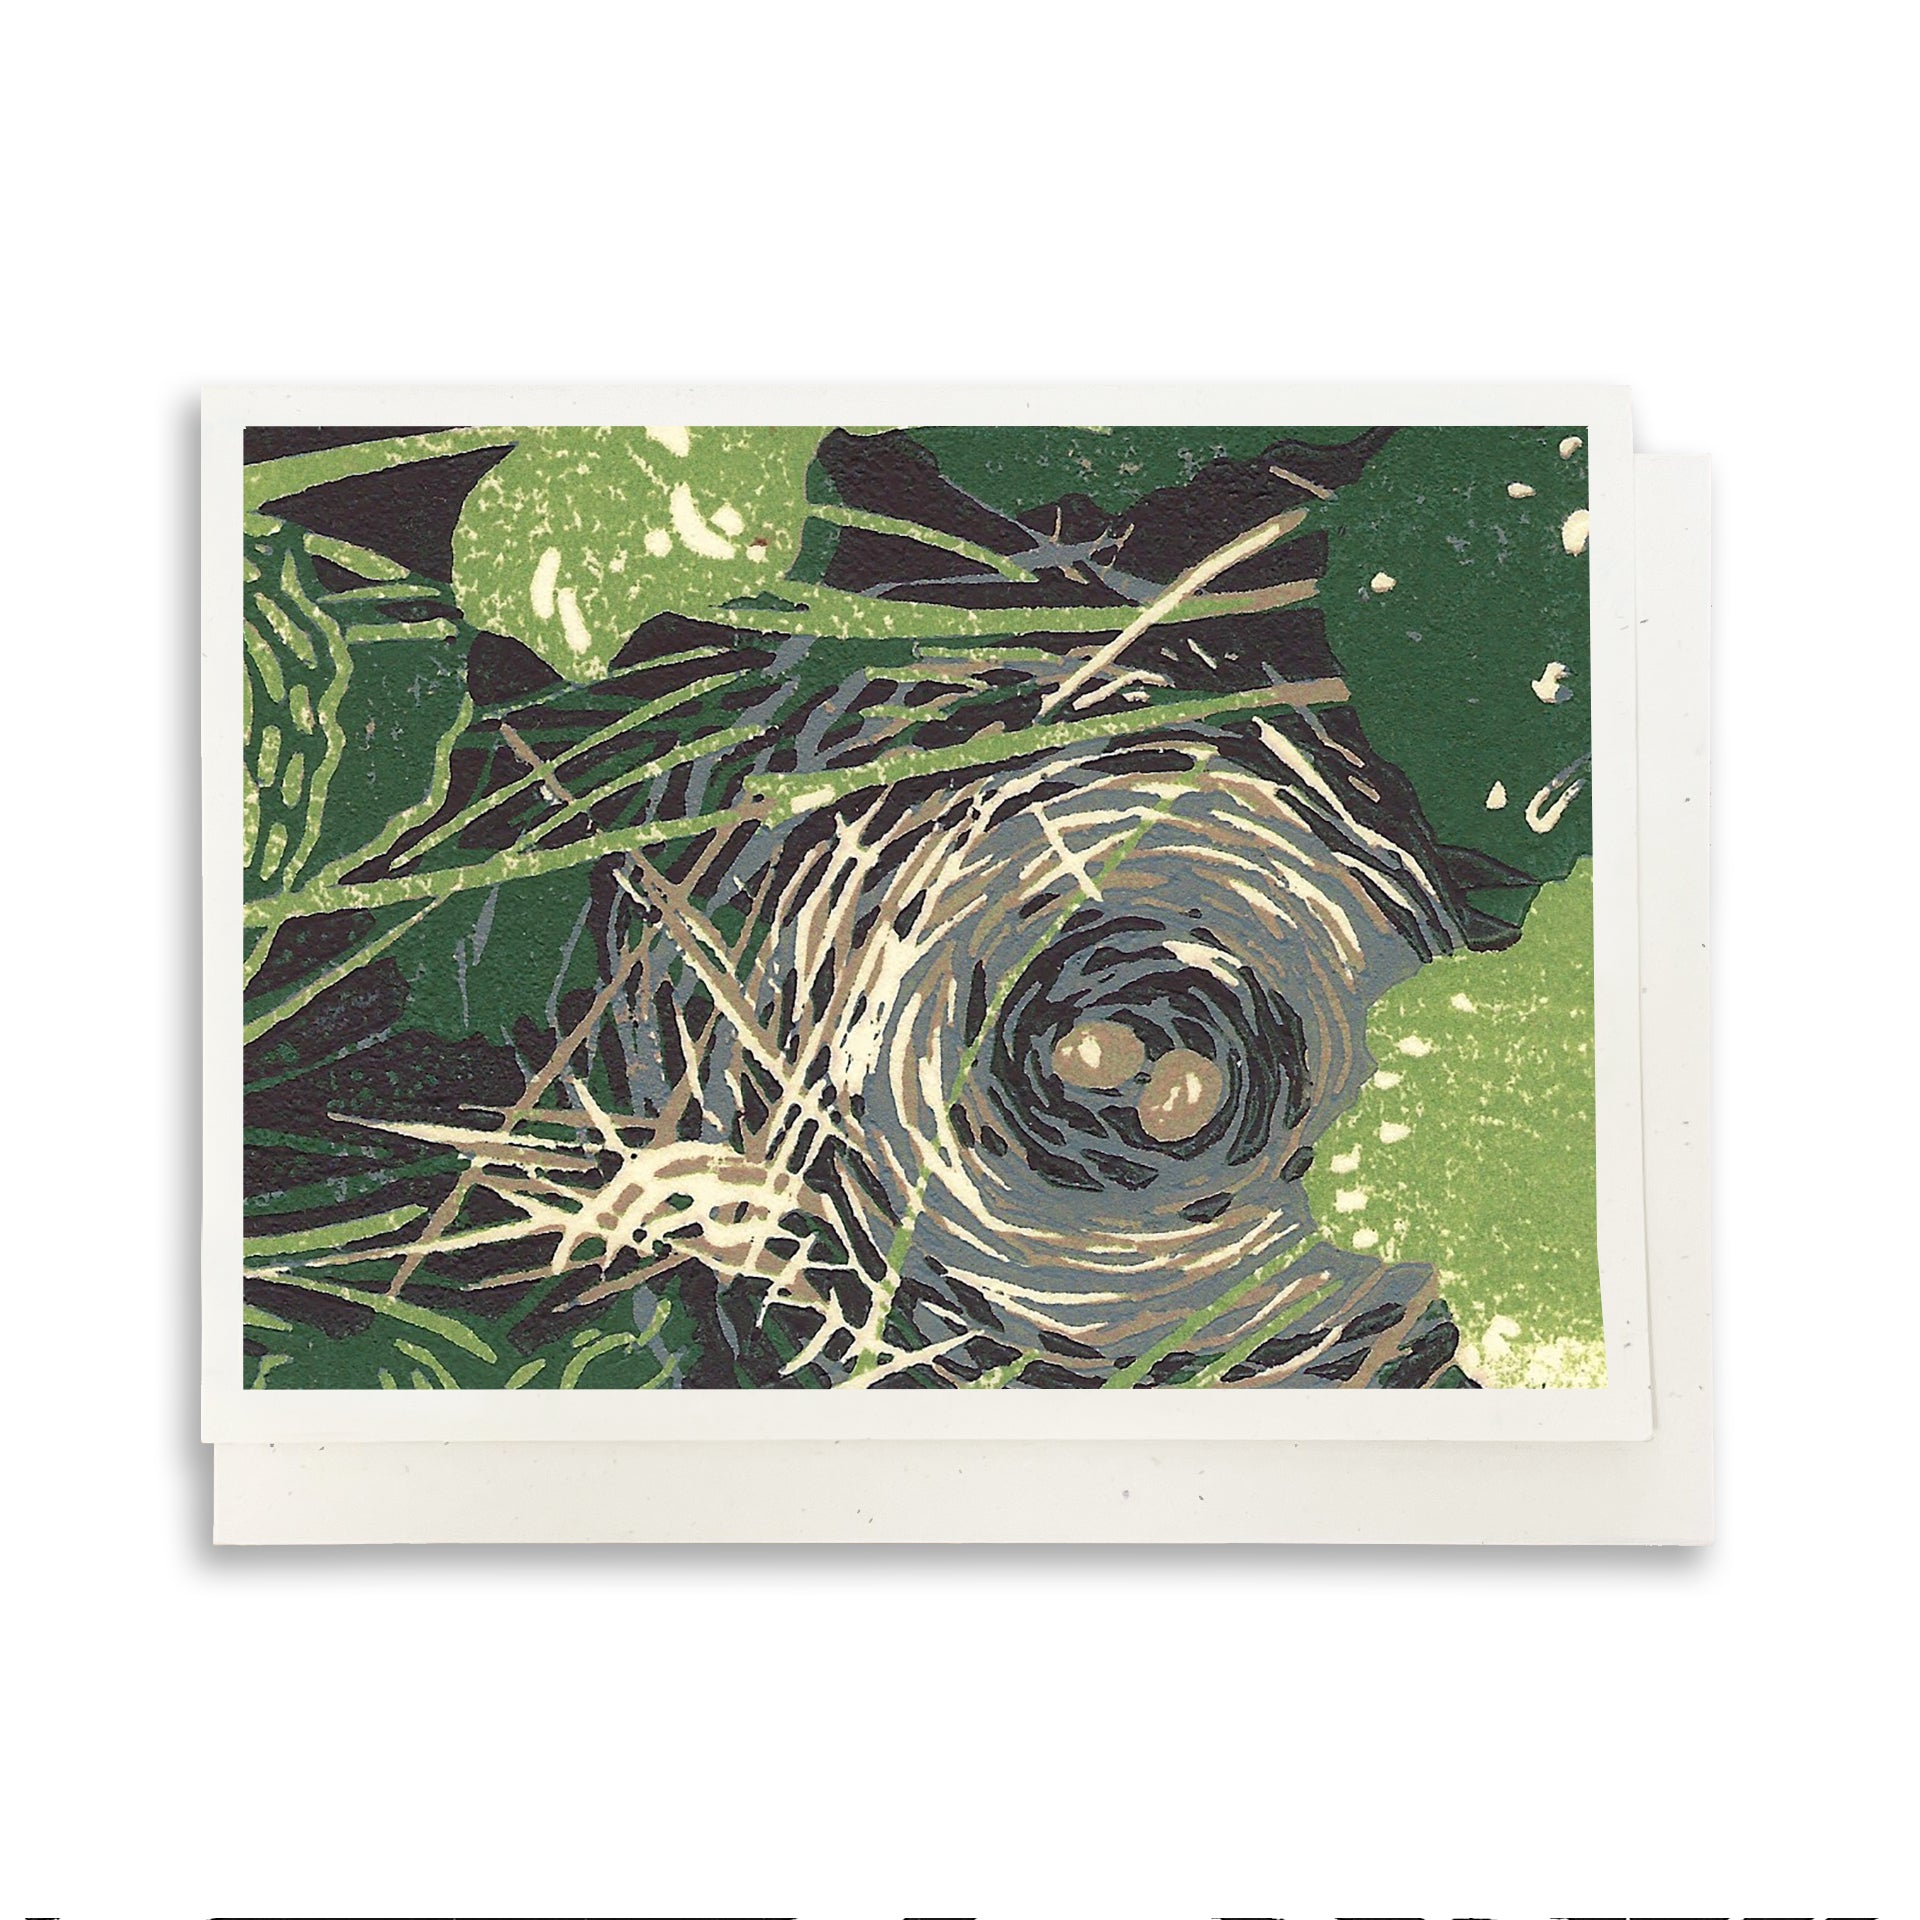 A casually elegant card featuring Michigan wildlife art by Natalia Wohletz titled Bird's Nest.